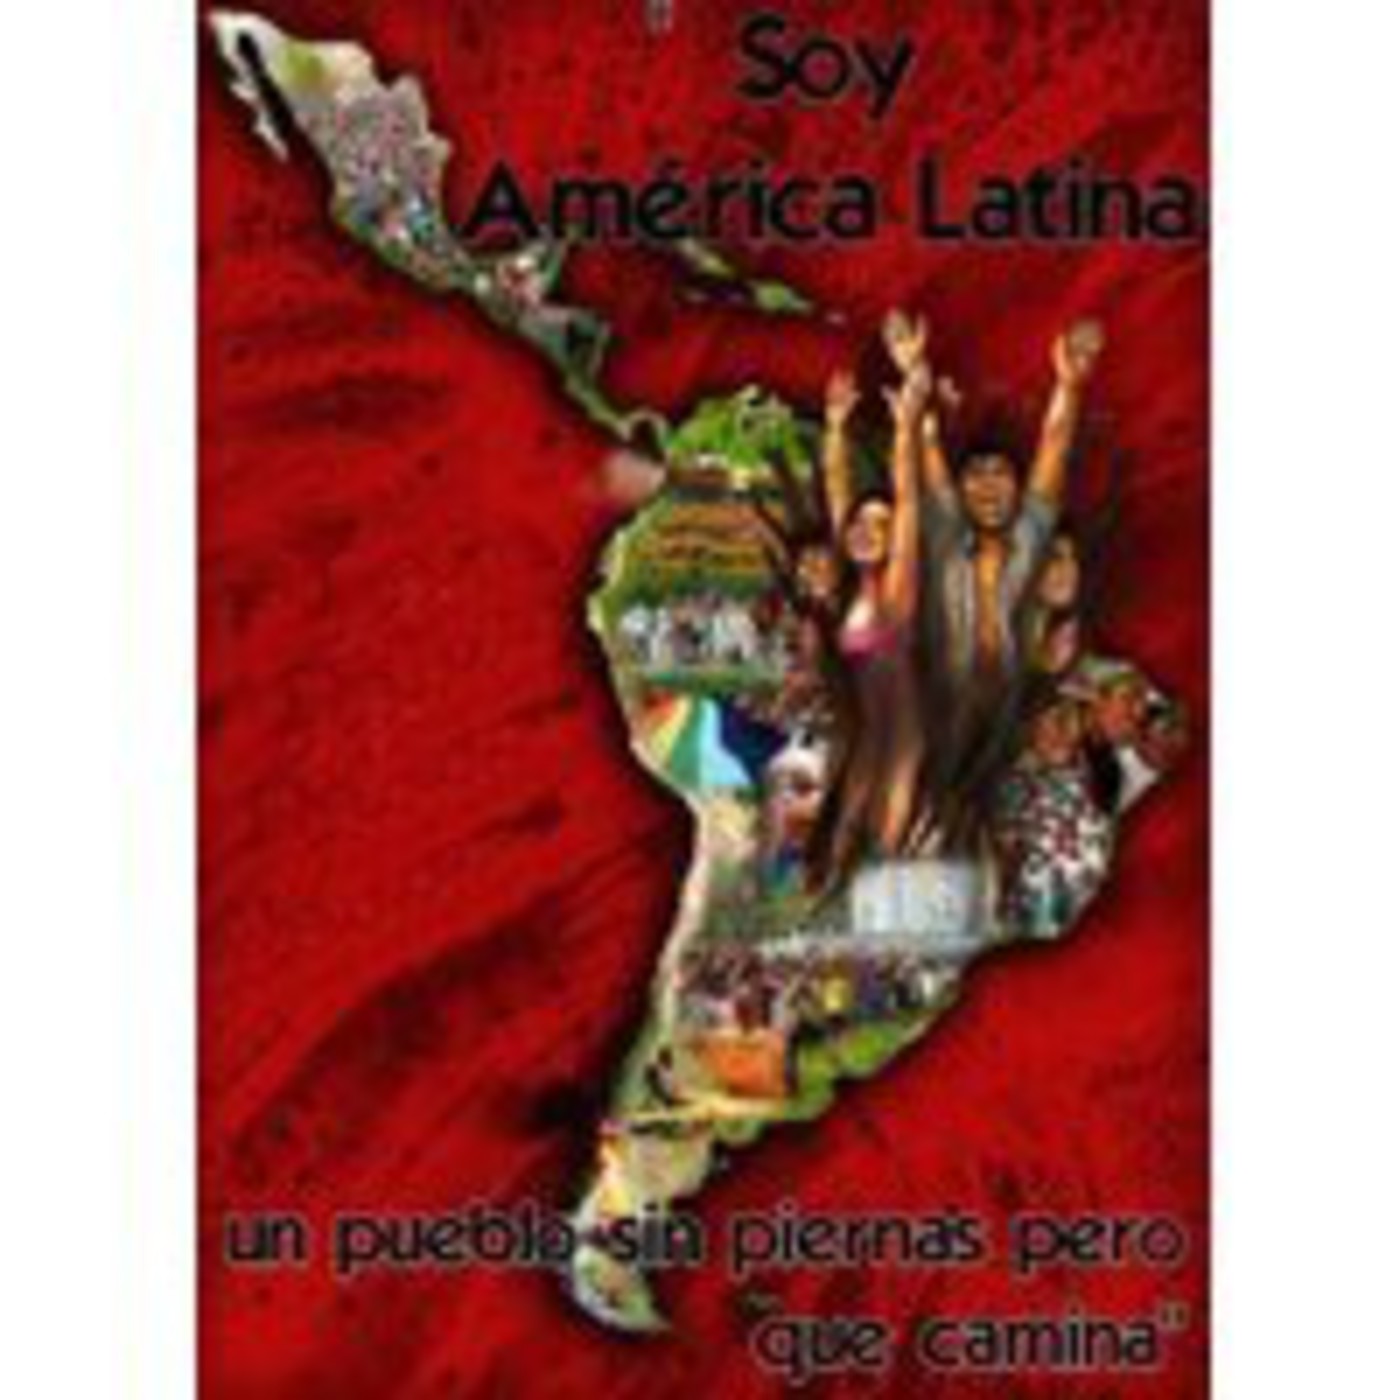 379 De Mistica Latinoamericana (Entrevista al Doc Avalos)